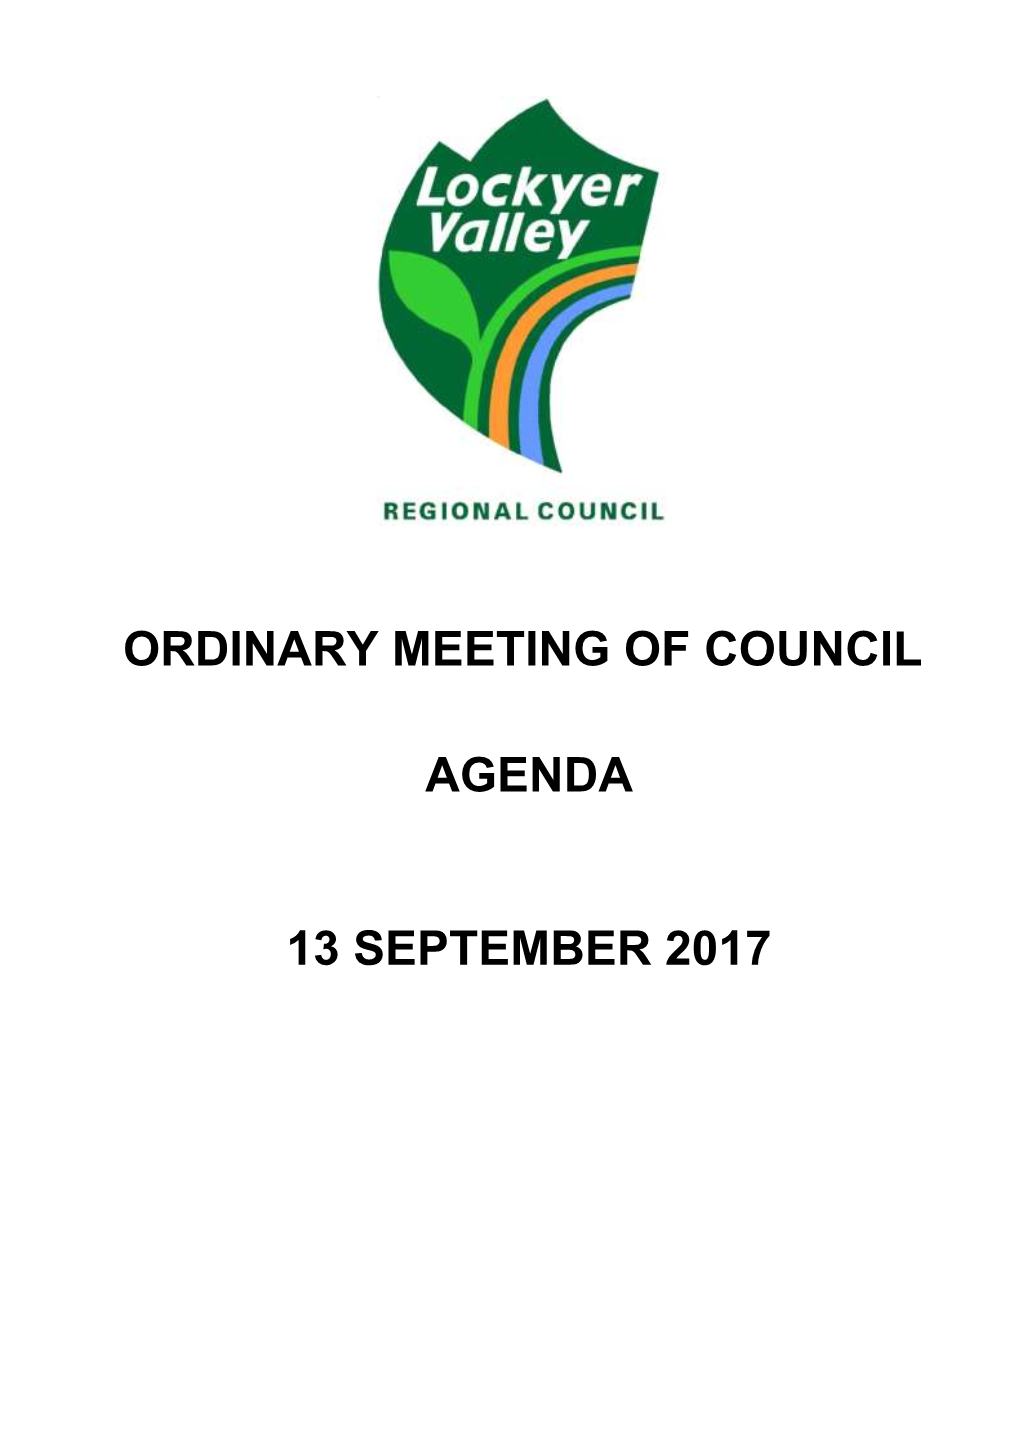 Ordinary Meeting of Council Agenda 13 September 2017